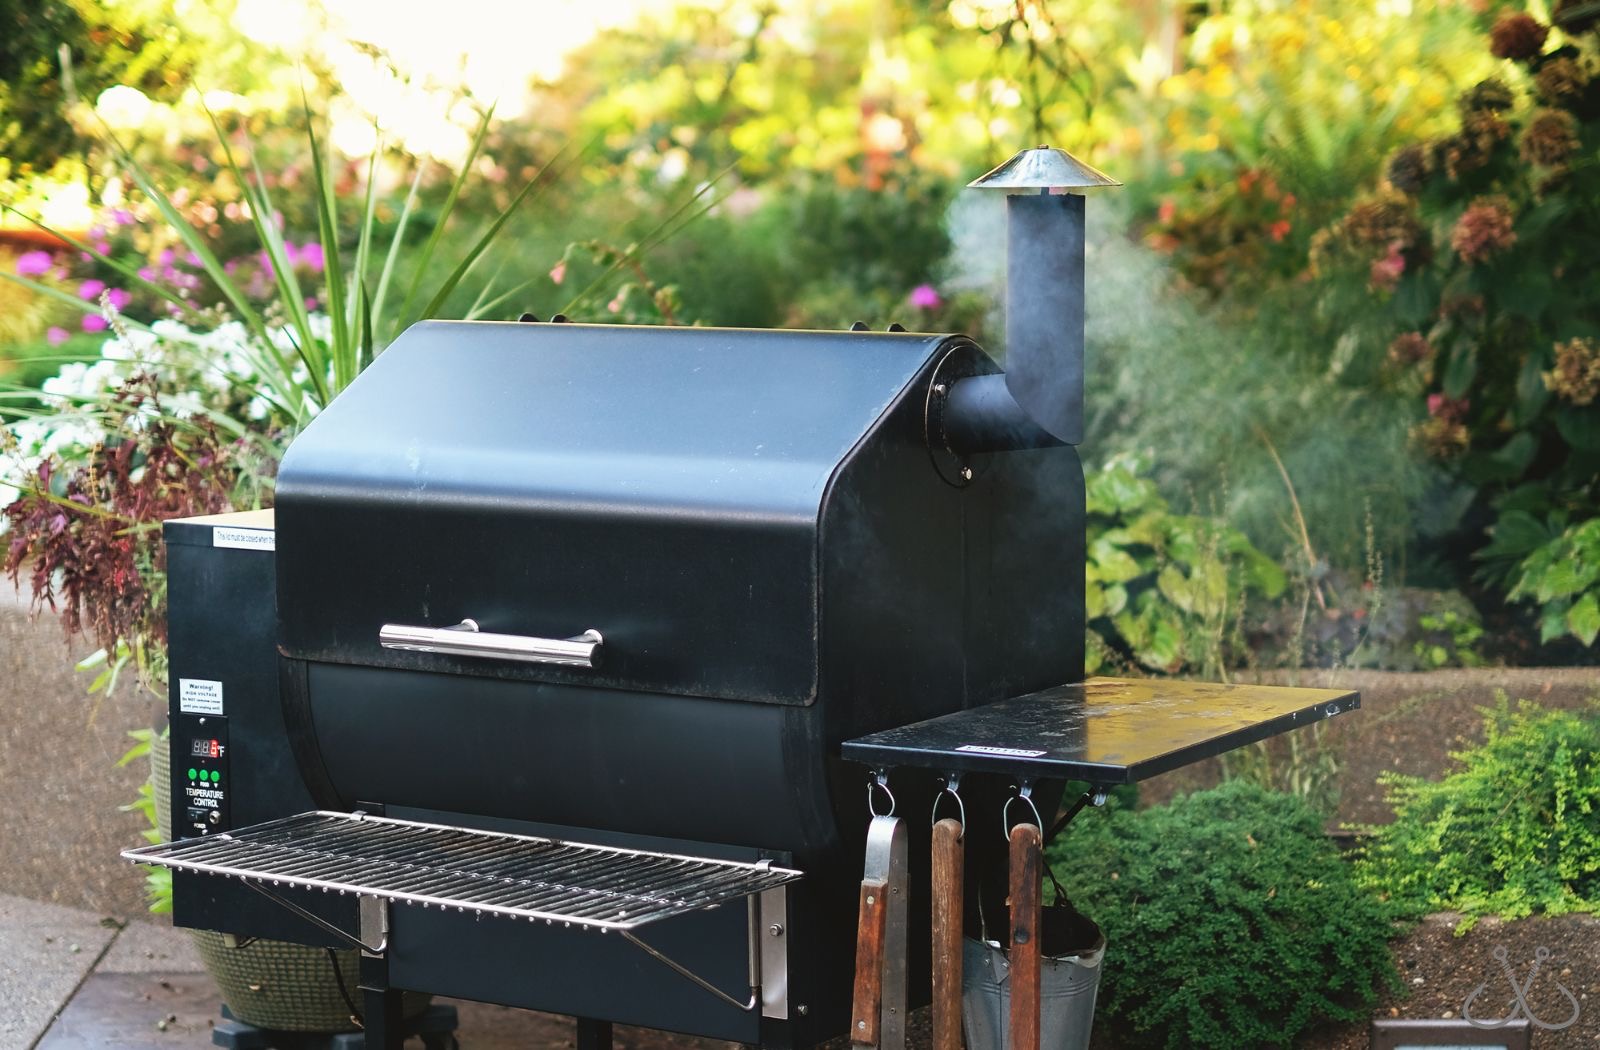 a black smoker grill in a backyard